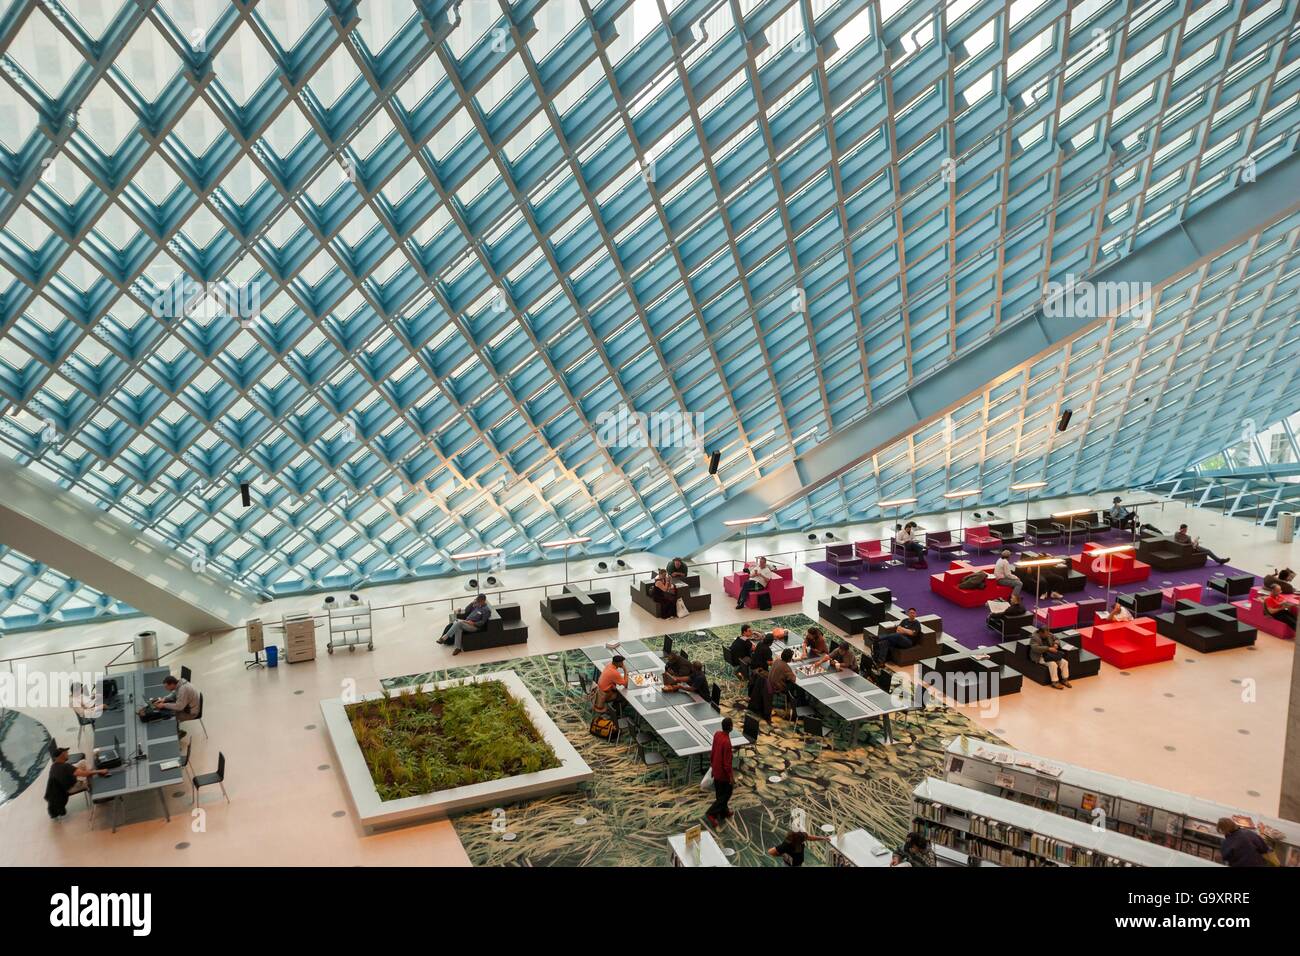 Seattle Public Library Interior Architecture Stock Photos